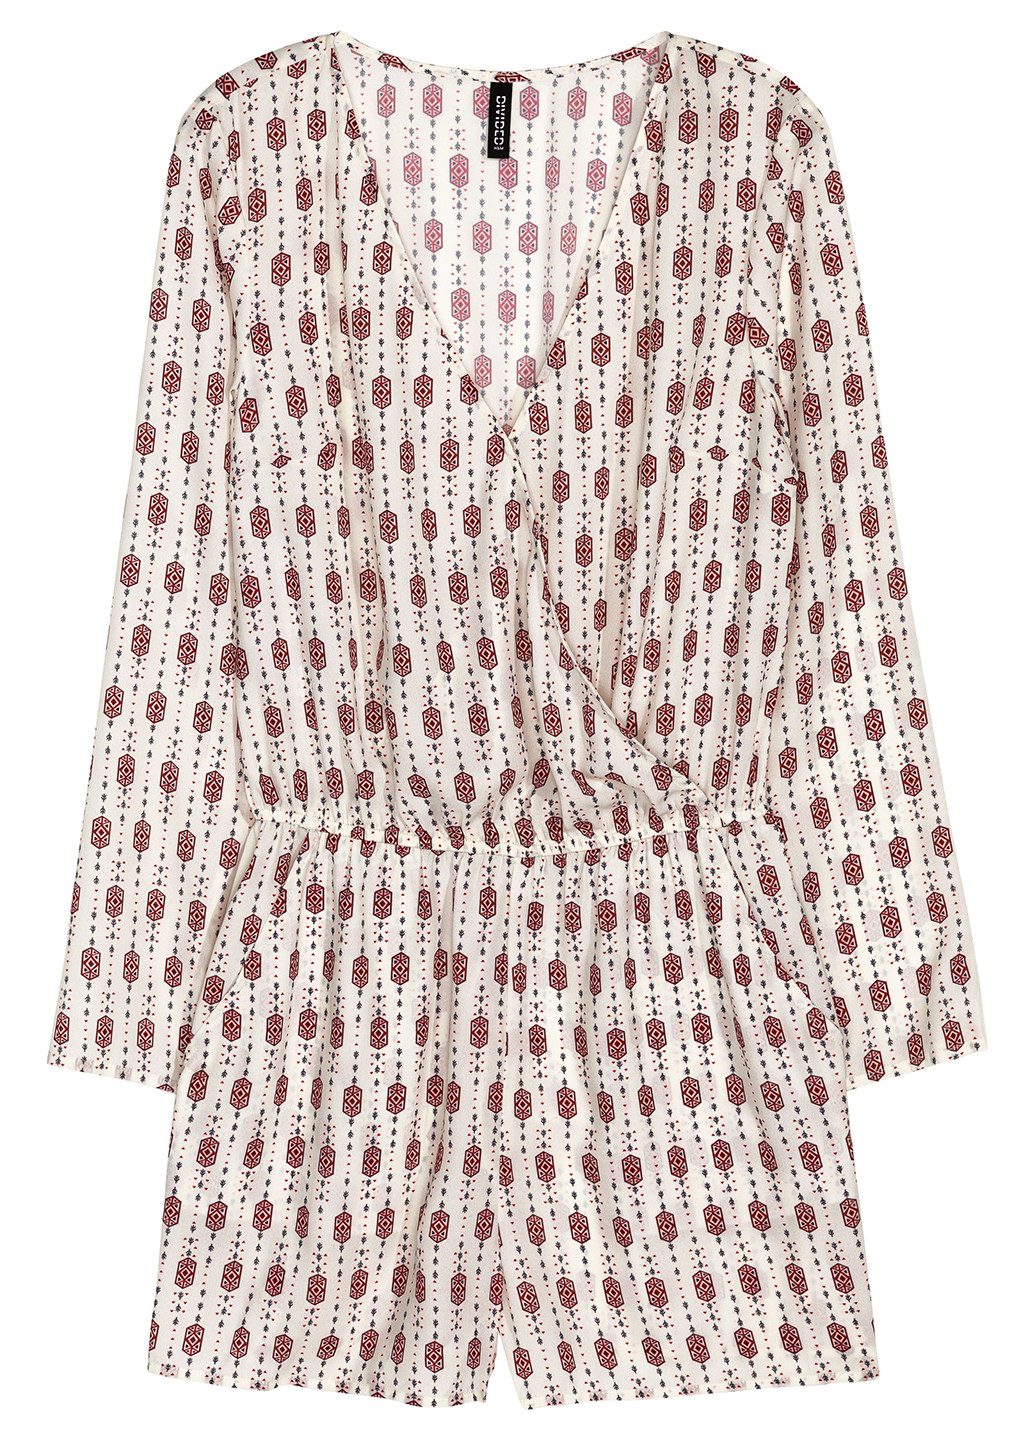 Комбинезон H&M комбинезон-шорты рисунок светло-бежевый кэжуал